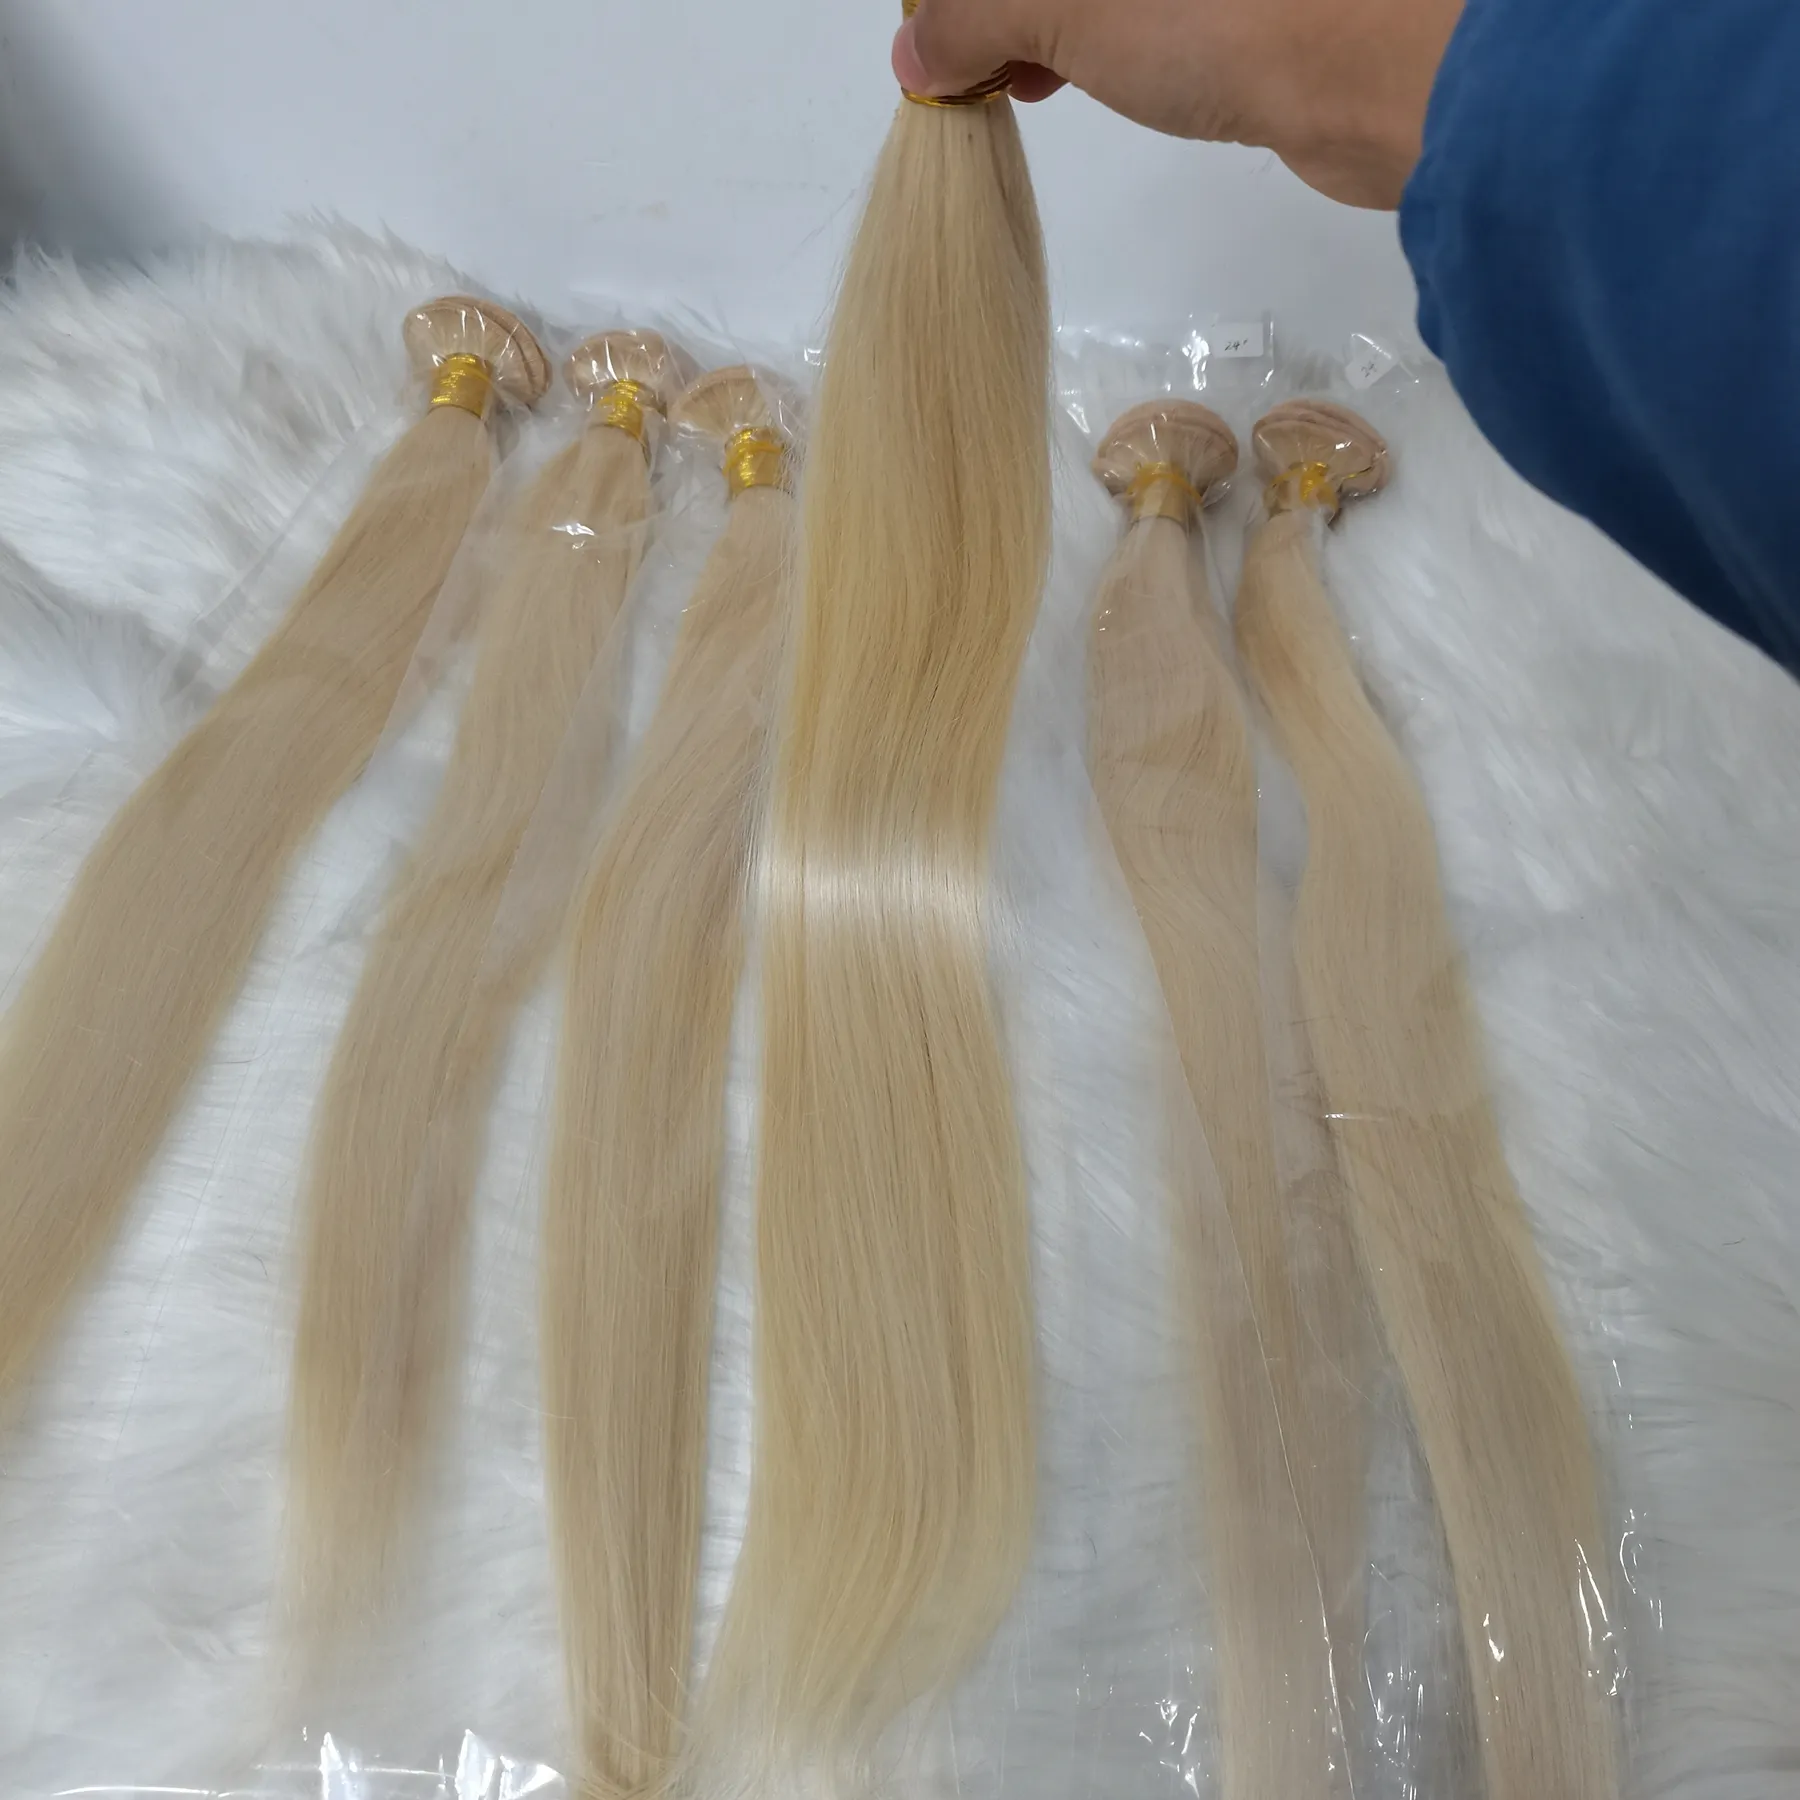 Amara best sale 613 virgin hair bundle top quality 613 virgin human hair wholesale raw 613 virgin hair in warehouse can ship now